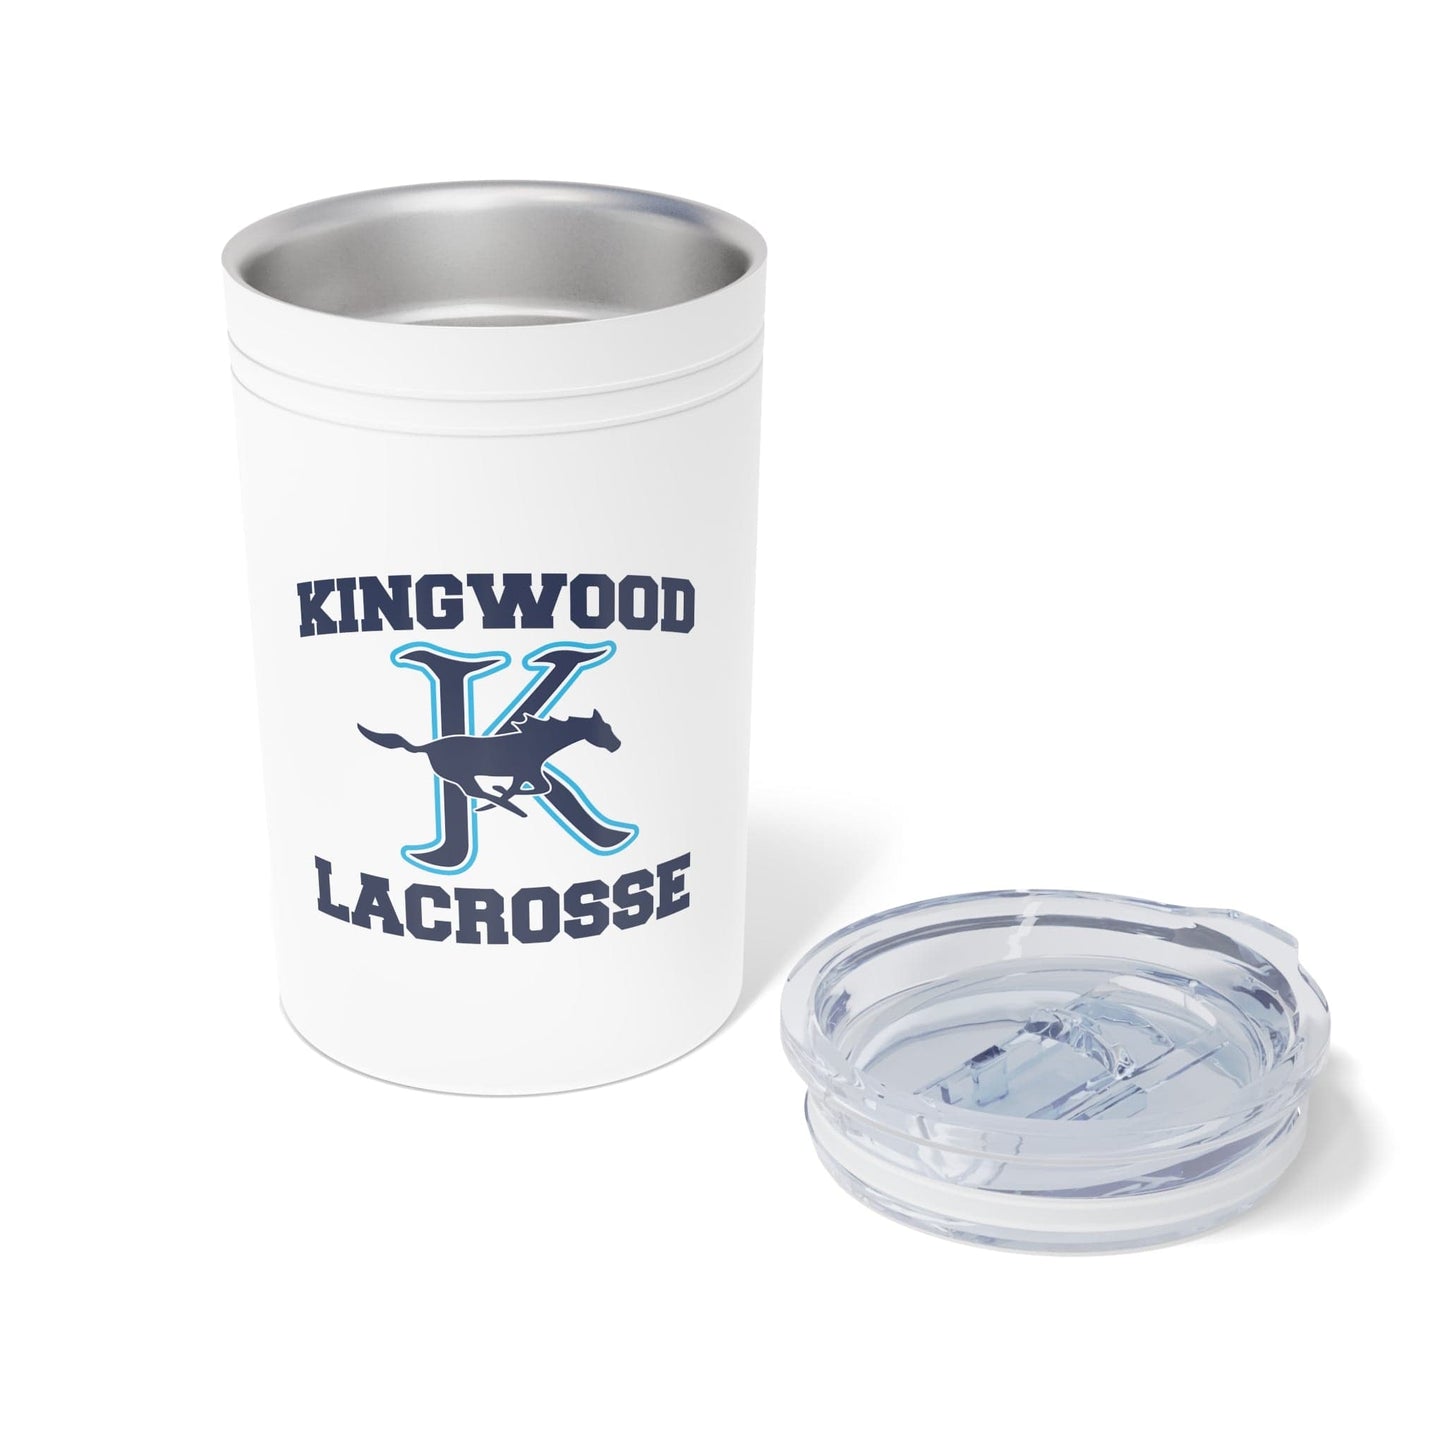 Kingwood Youth Lacrosse Vacuum Insulated Tumblr, 11 oz Signature Lacrosse